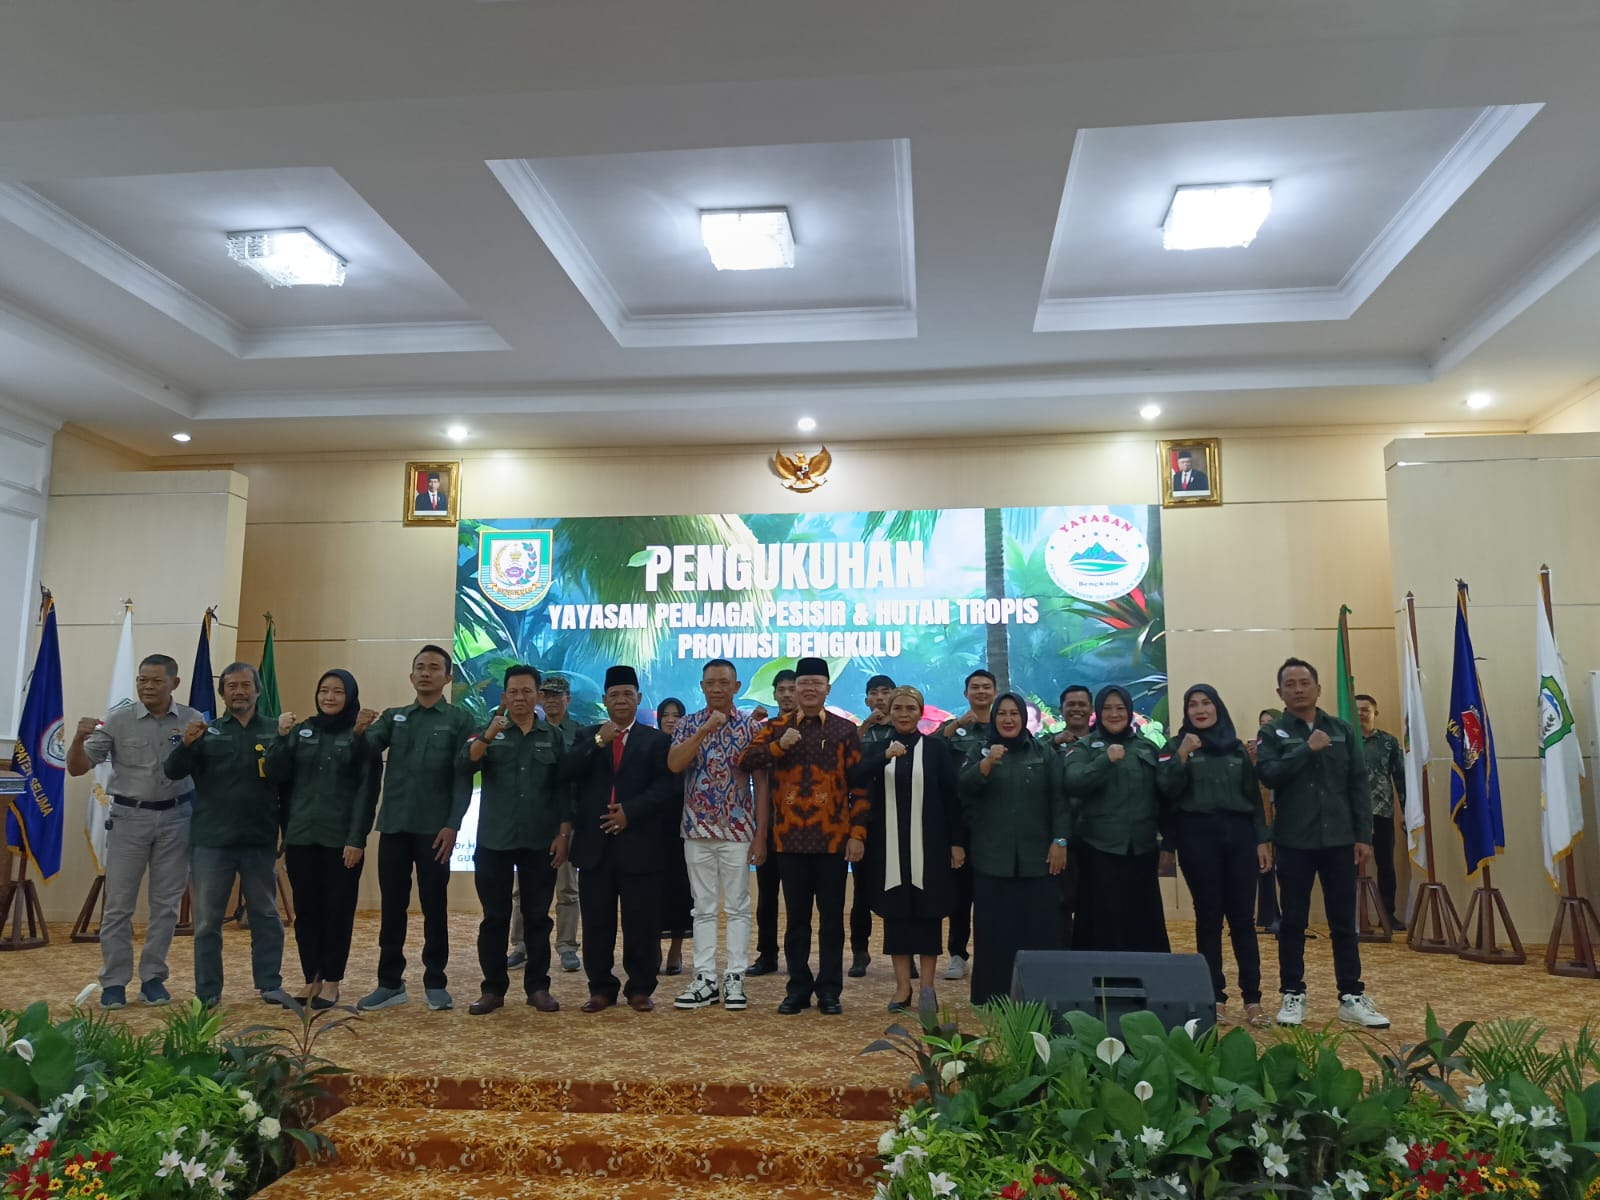 Ini Pesan Gubernur Rohidin Usai Pengukuhan Yayasan Penjaga Pesisir dan Hutan Tropis Bengkulu 